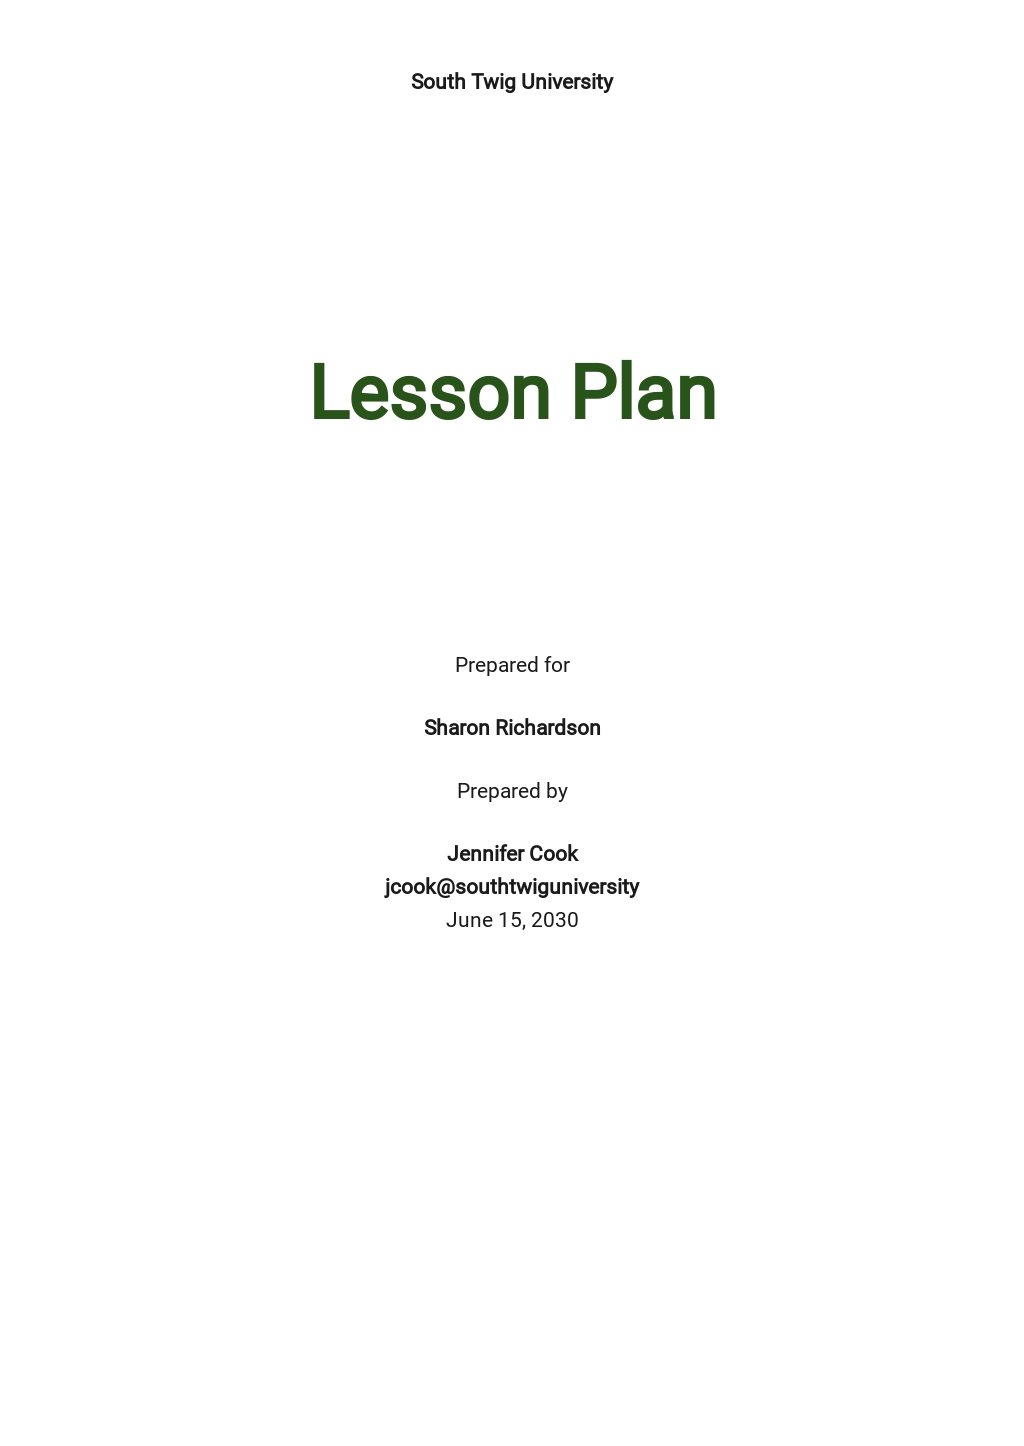 Lesson Plan Outline Template - Google Docs, Word, Apple Pages, PDF